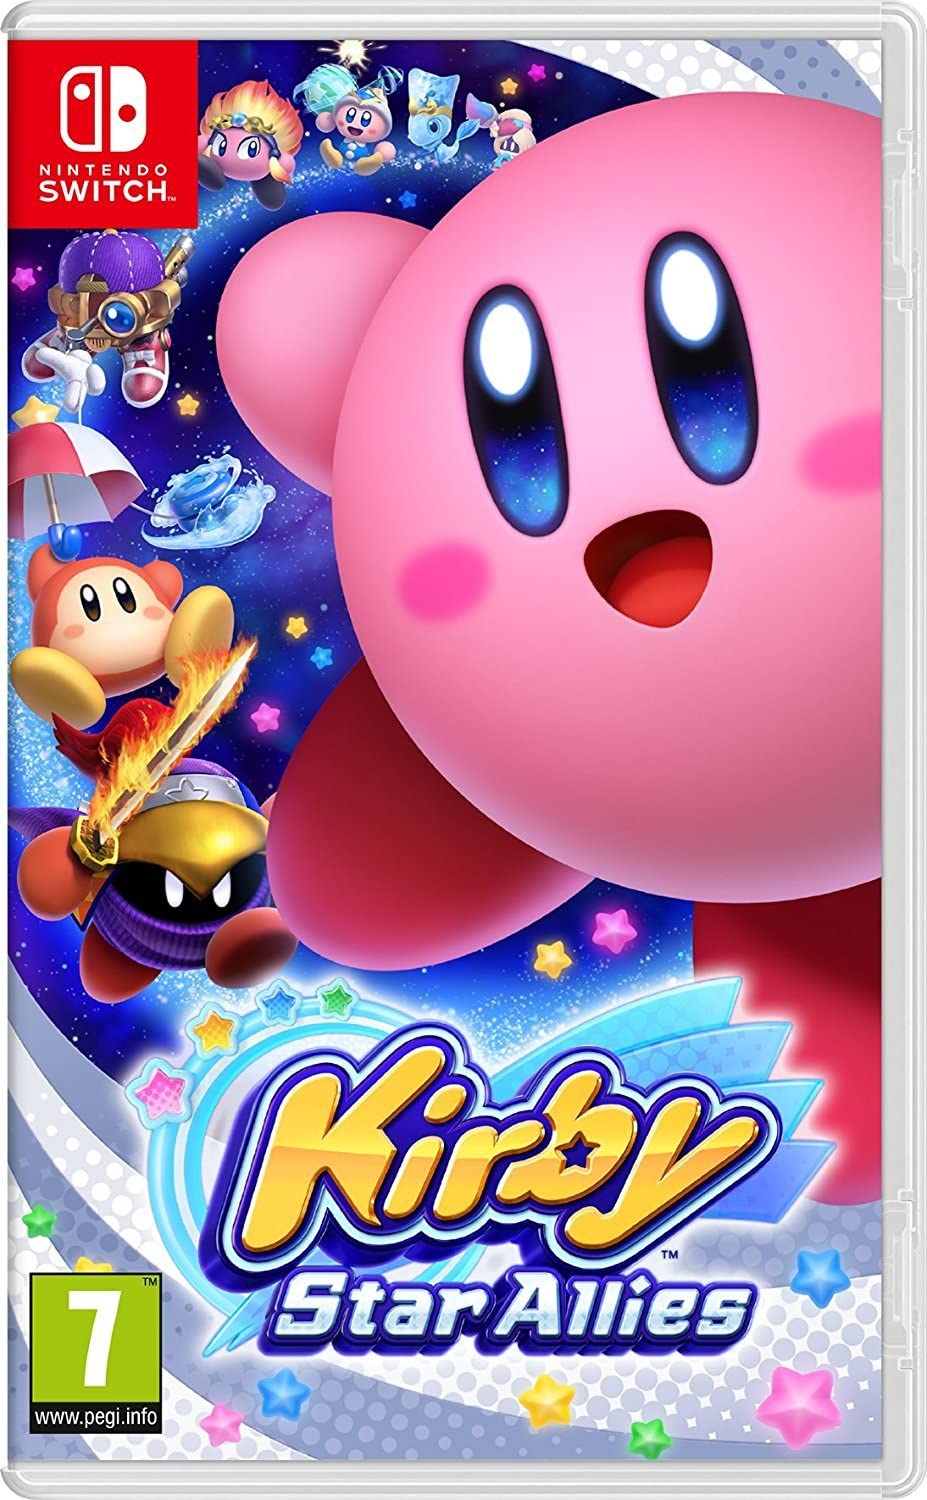 Kirby: Star Allies for Nintendo Switch.